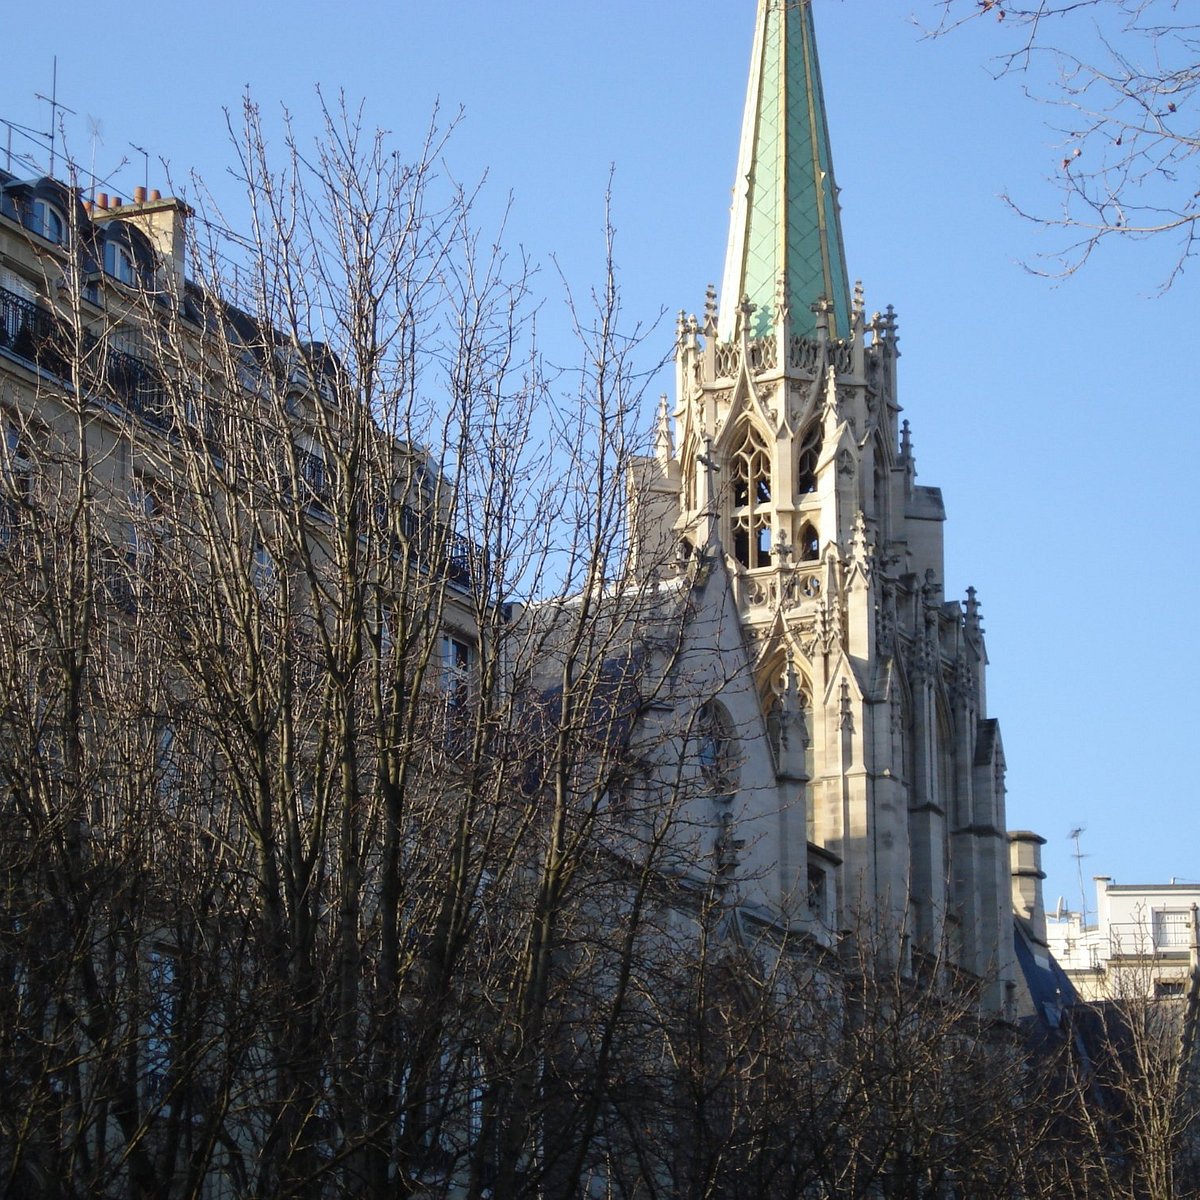 The American Church in Paris